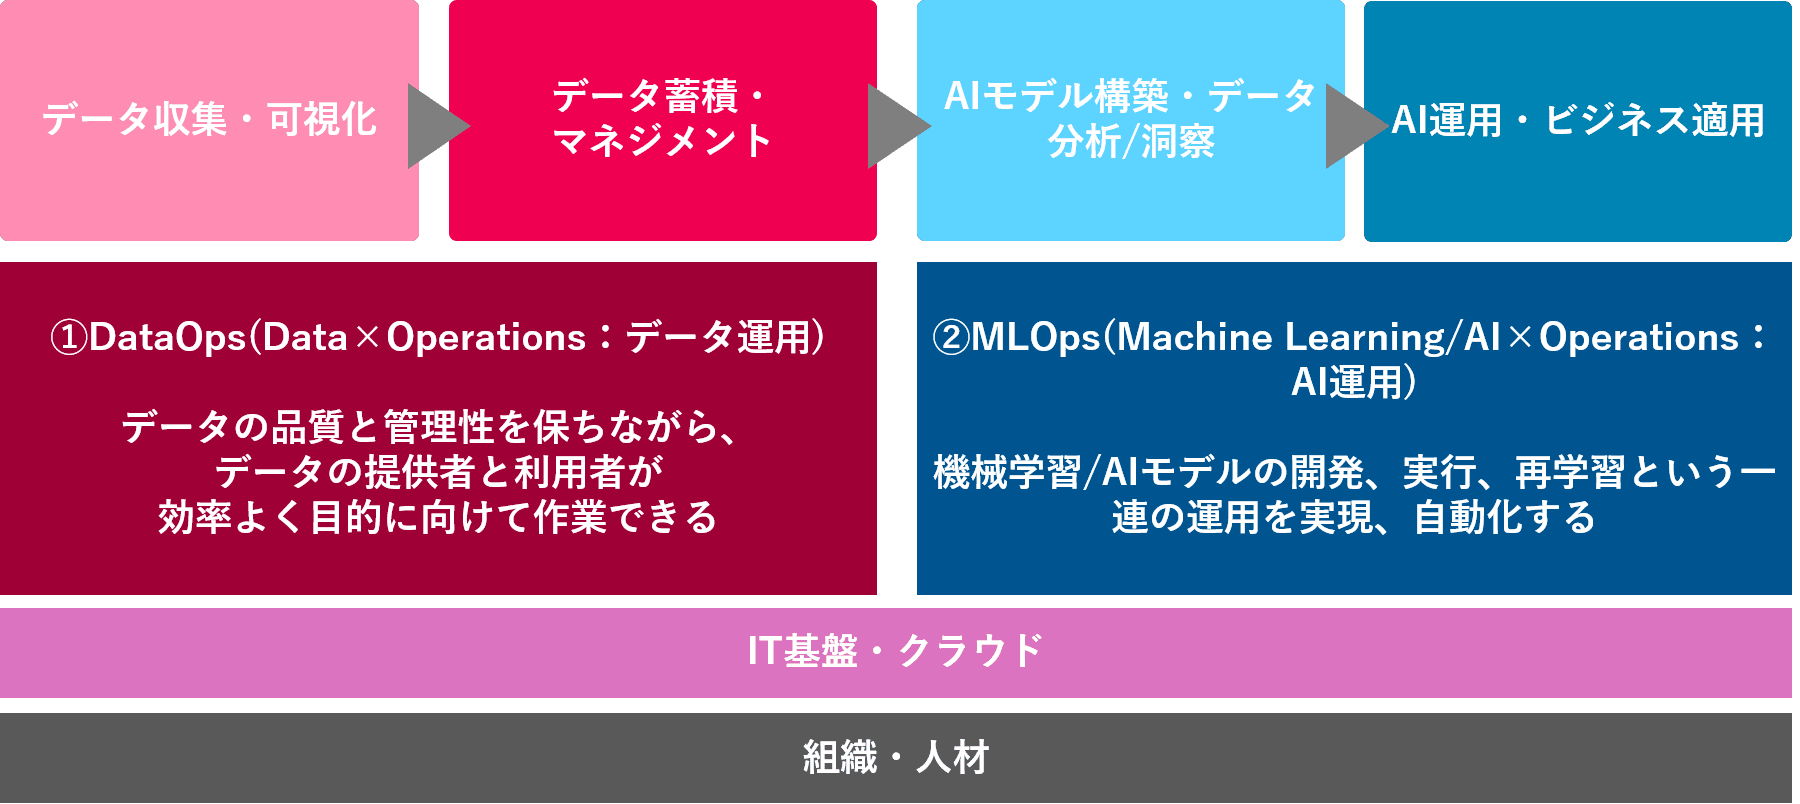 https://isid-ai.jp/assets/images/column/column11/figure3.png